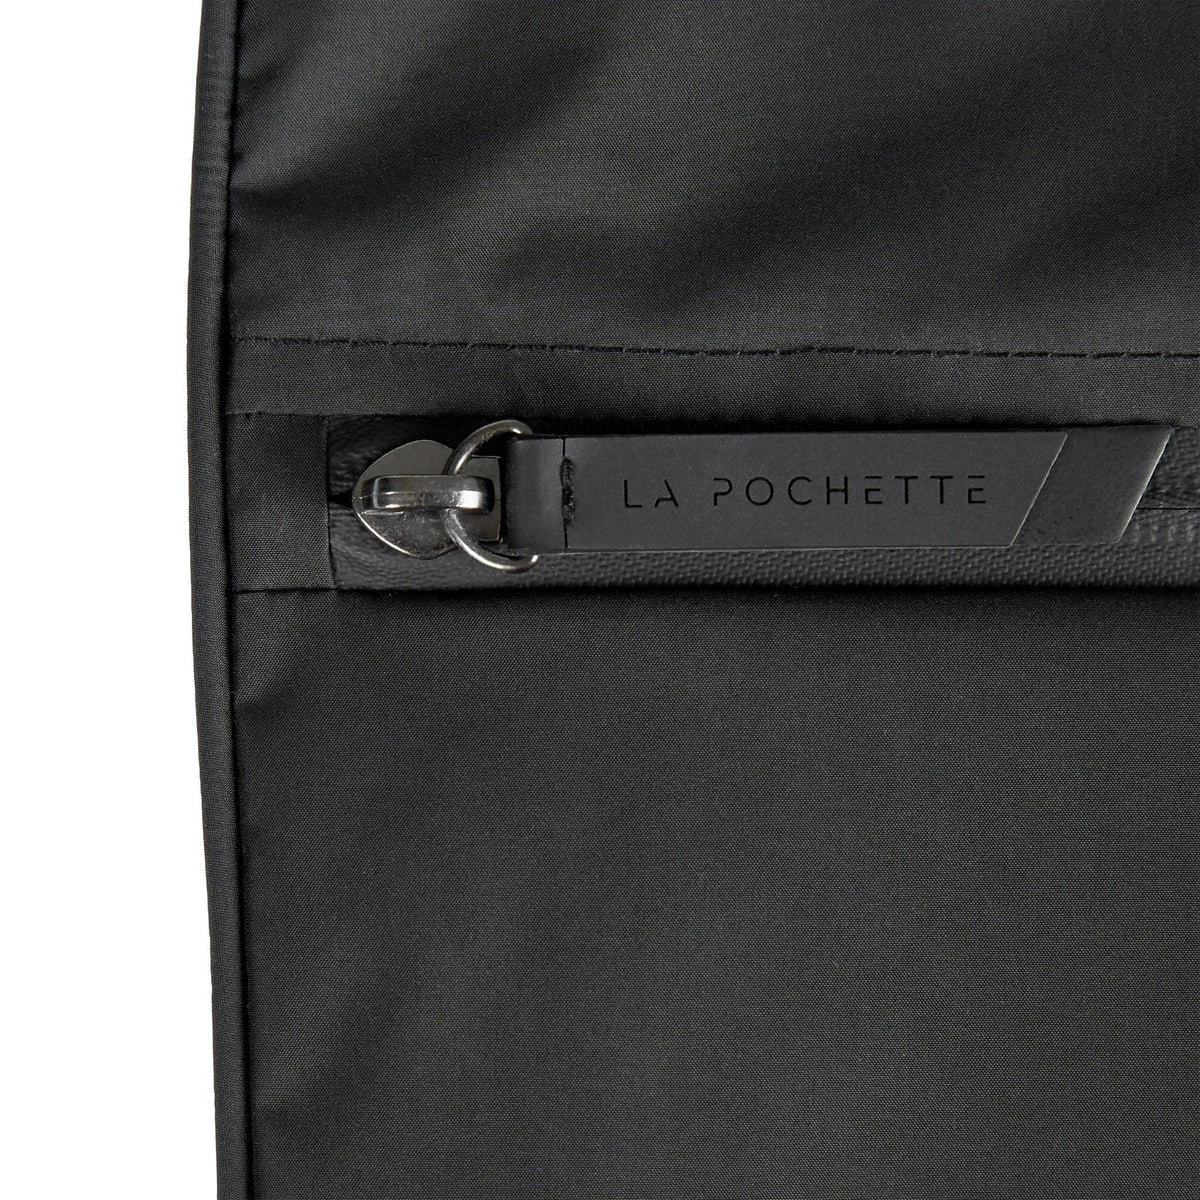 La Pochette zip detail on the Ink Sweat Bag